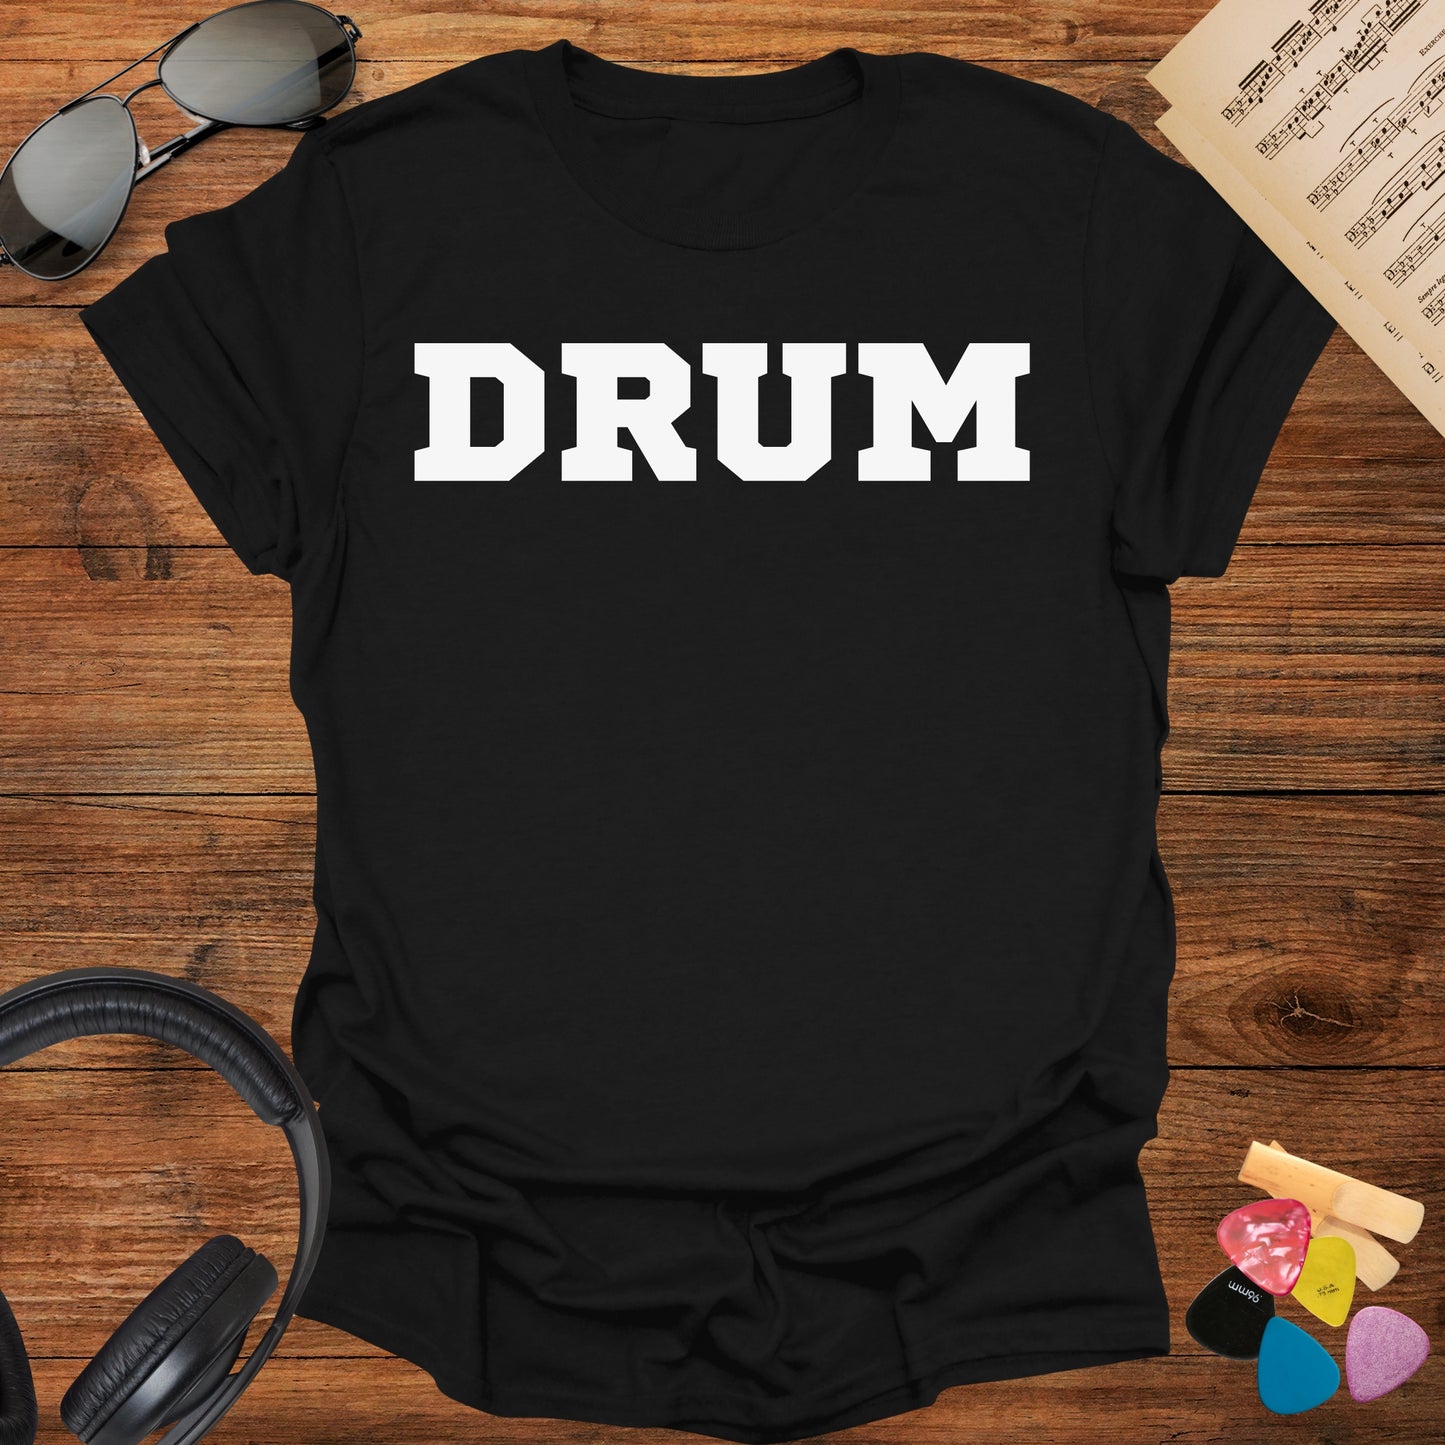 Drum T-shirt